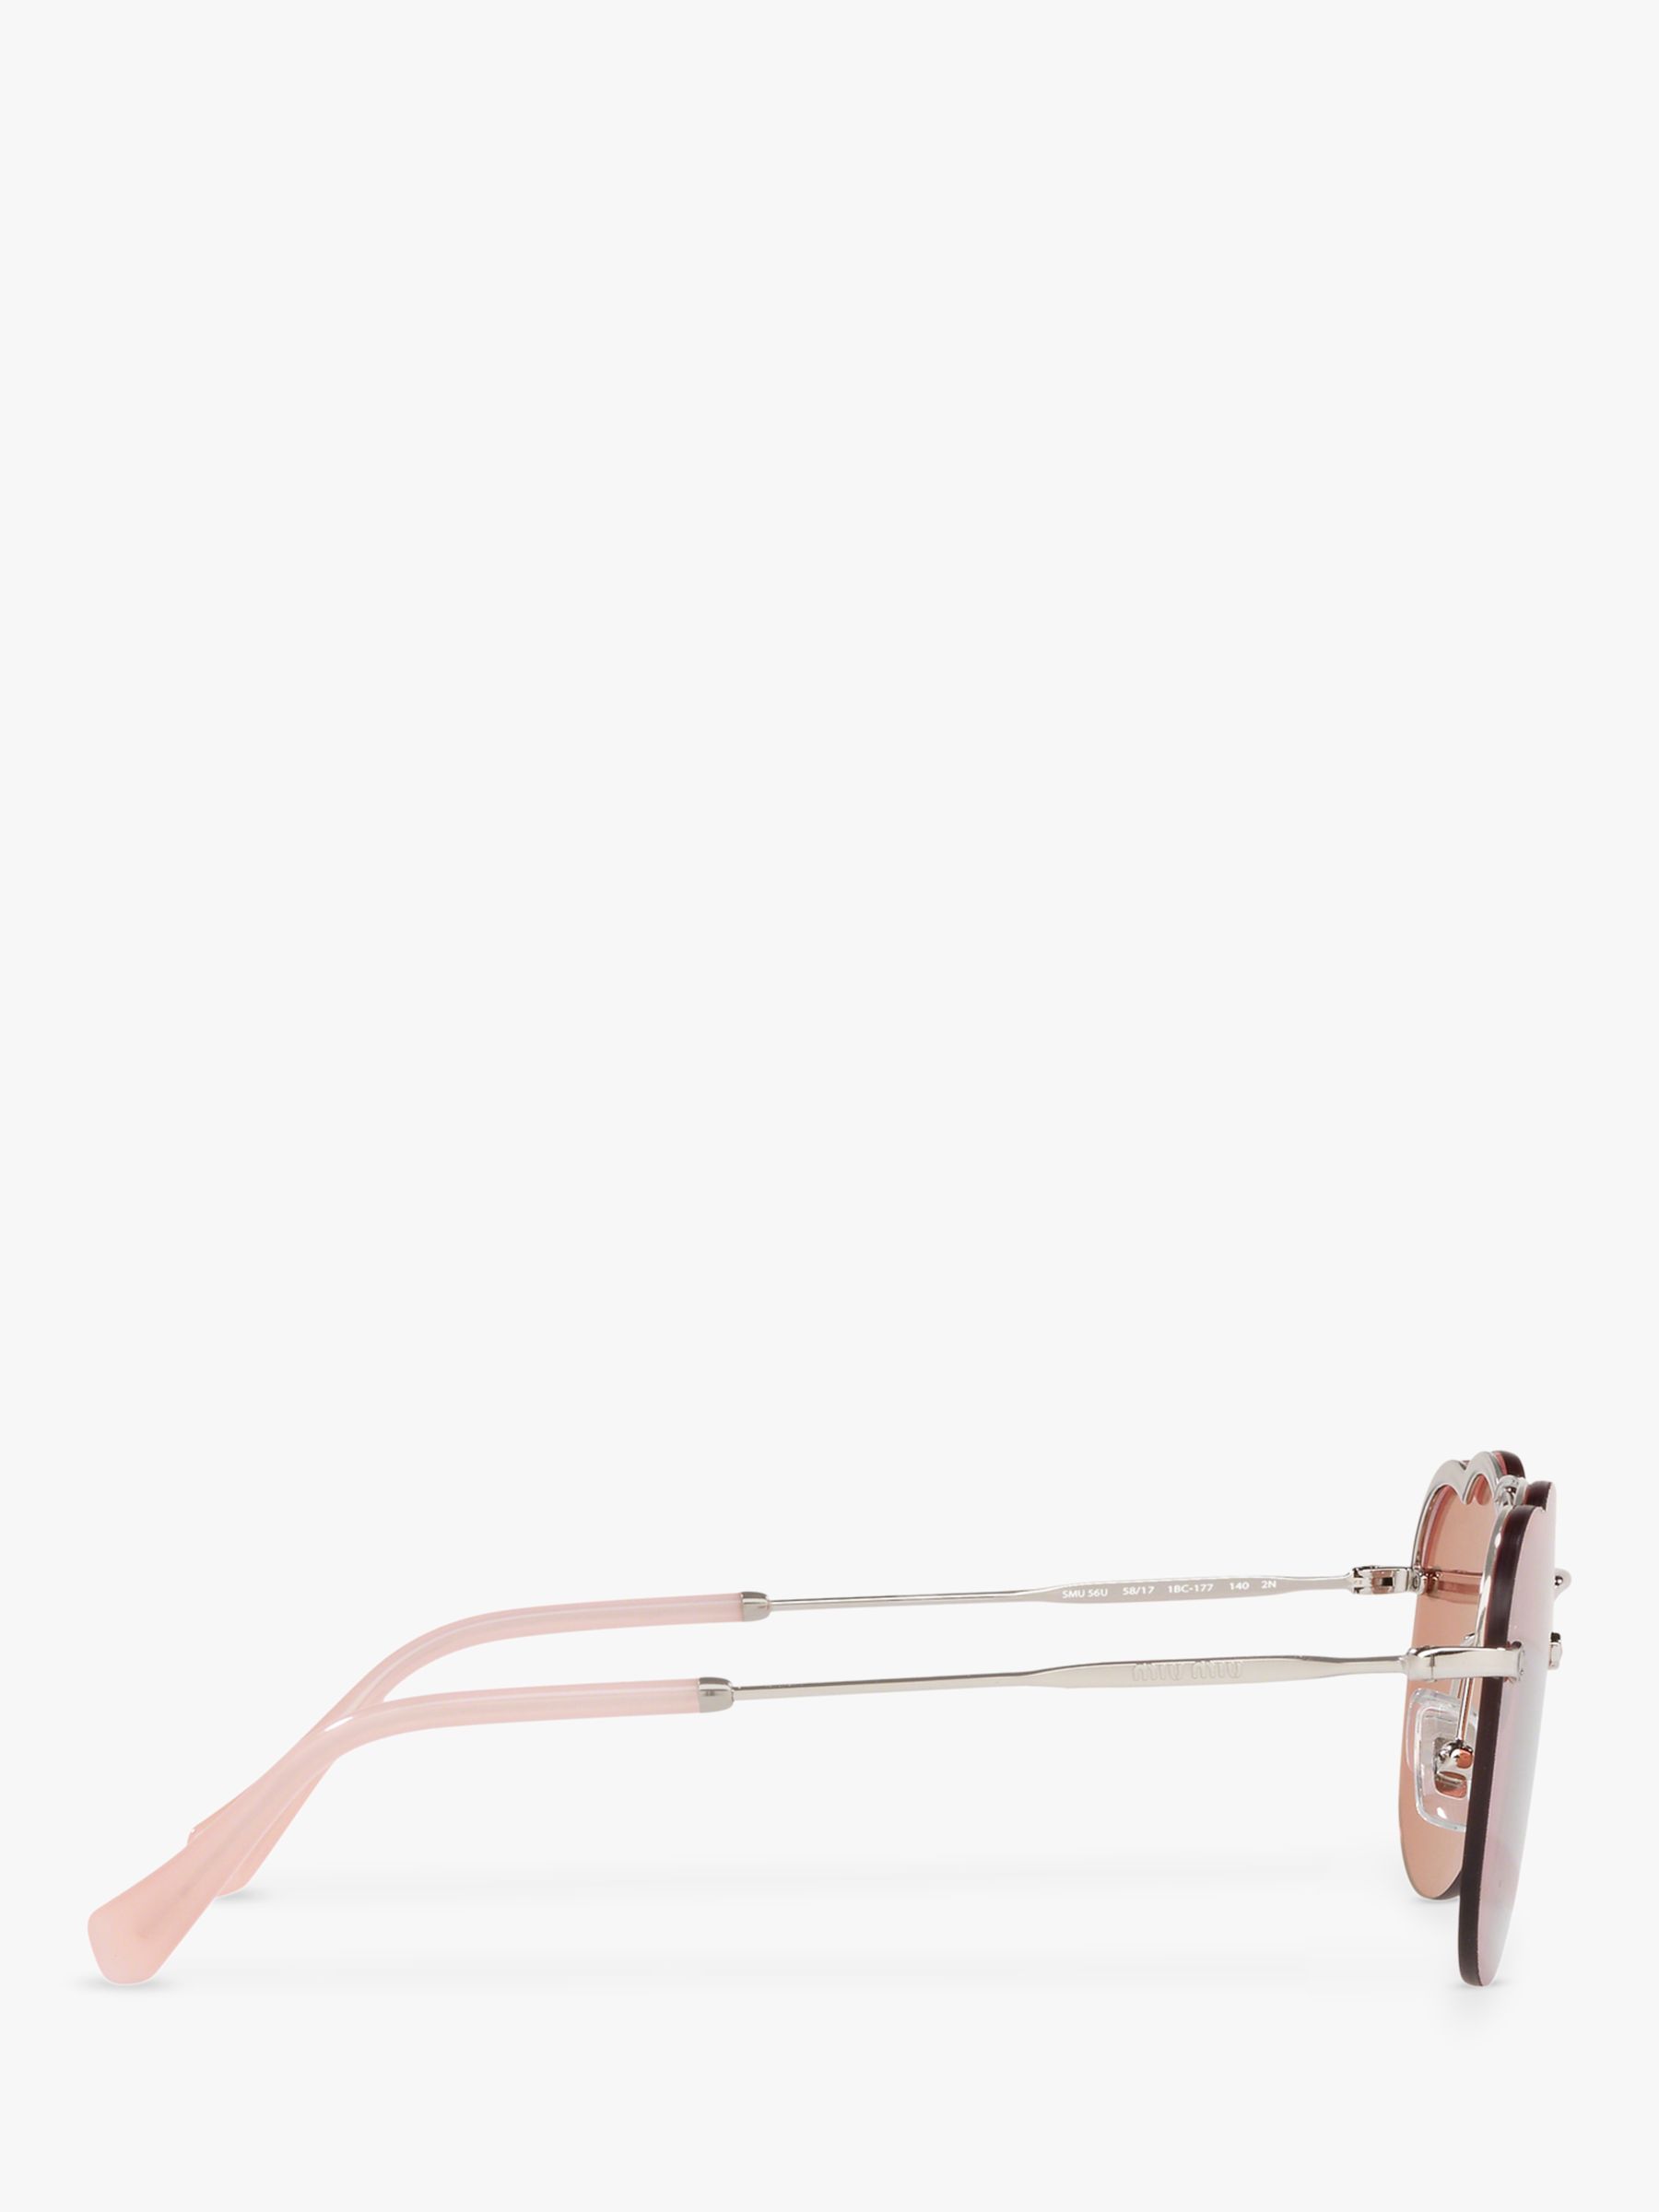 Buy Miu Miu MU 56US Women's Scalloped Aviator Sunglasses, Silver/Pink Online at johnlewis.com